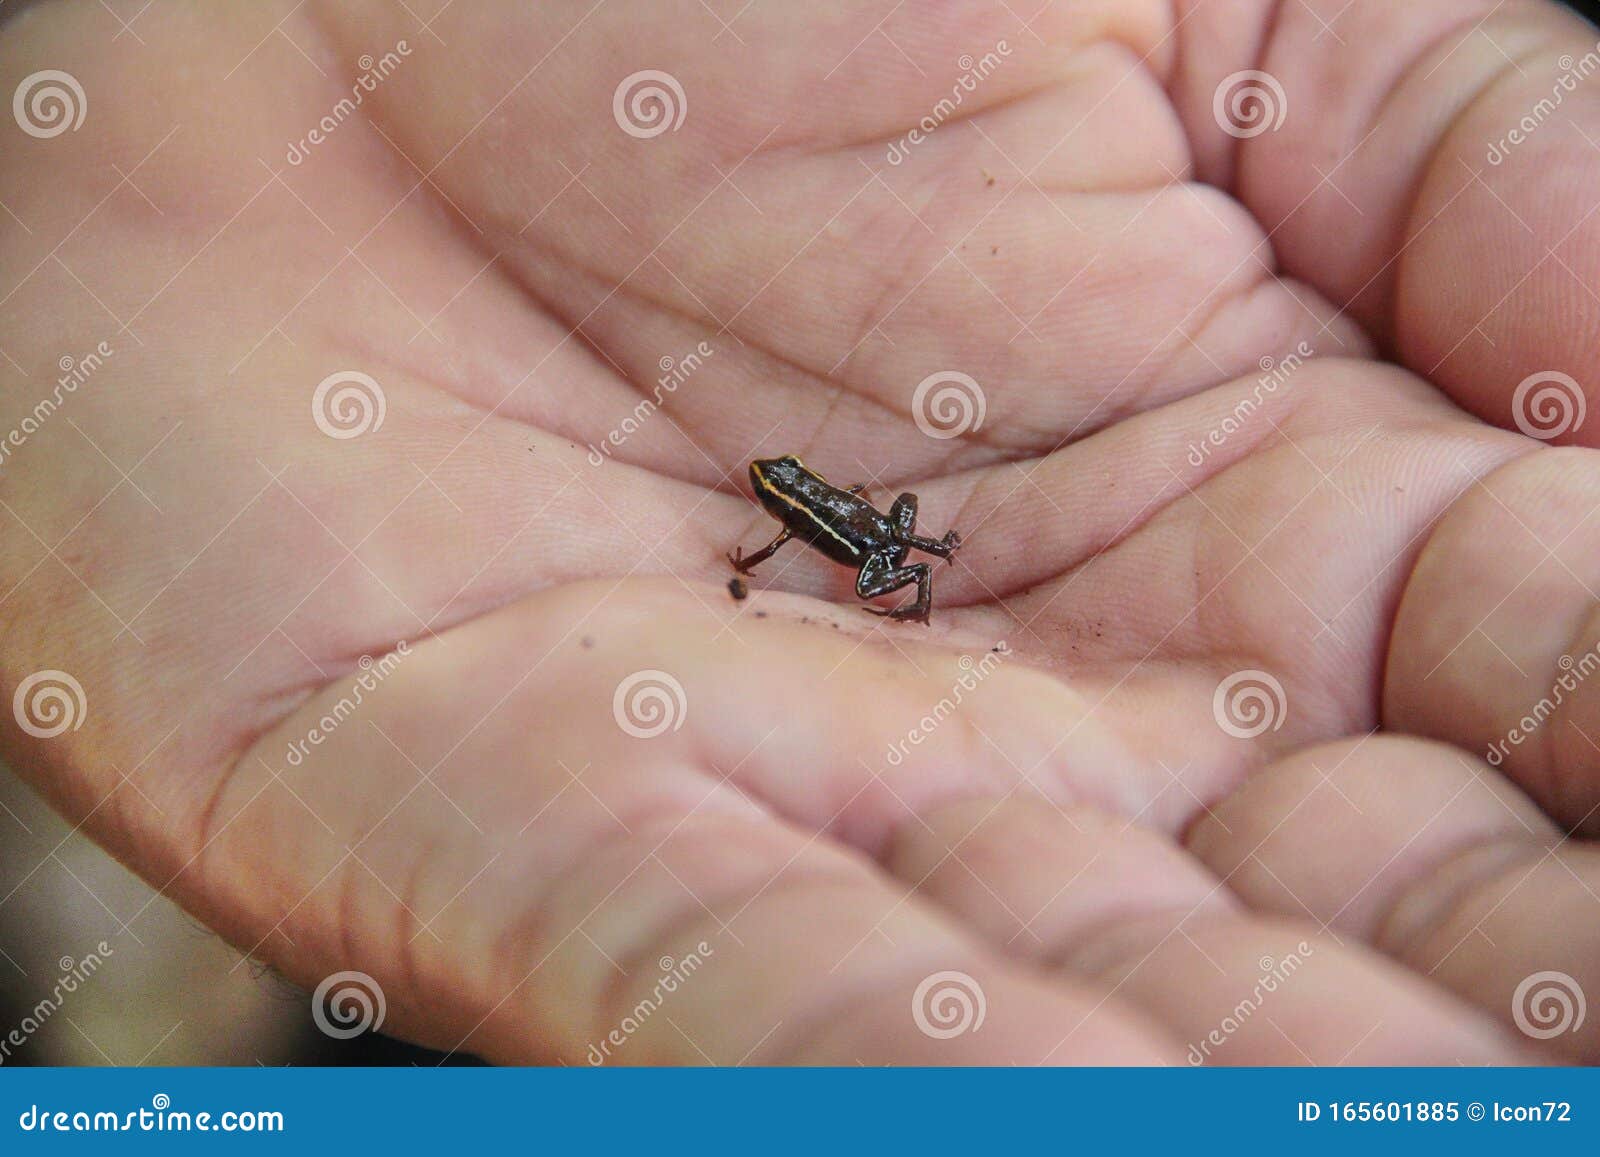 monte iberia eleuth frog eleutherodactylus iberia, the smallest frog in the world 8 to 10 mm, near baracoa, eastern cuba